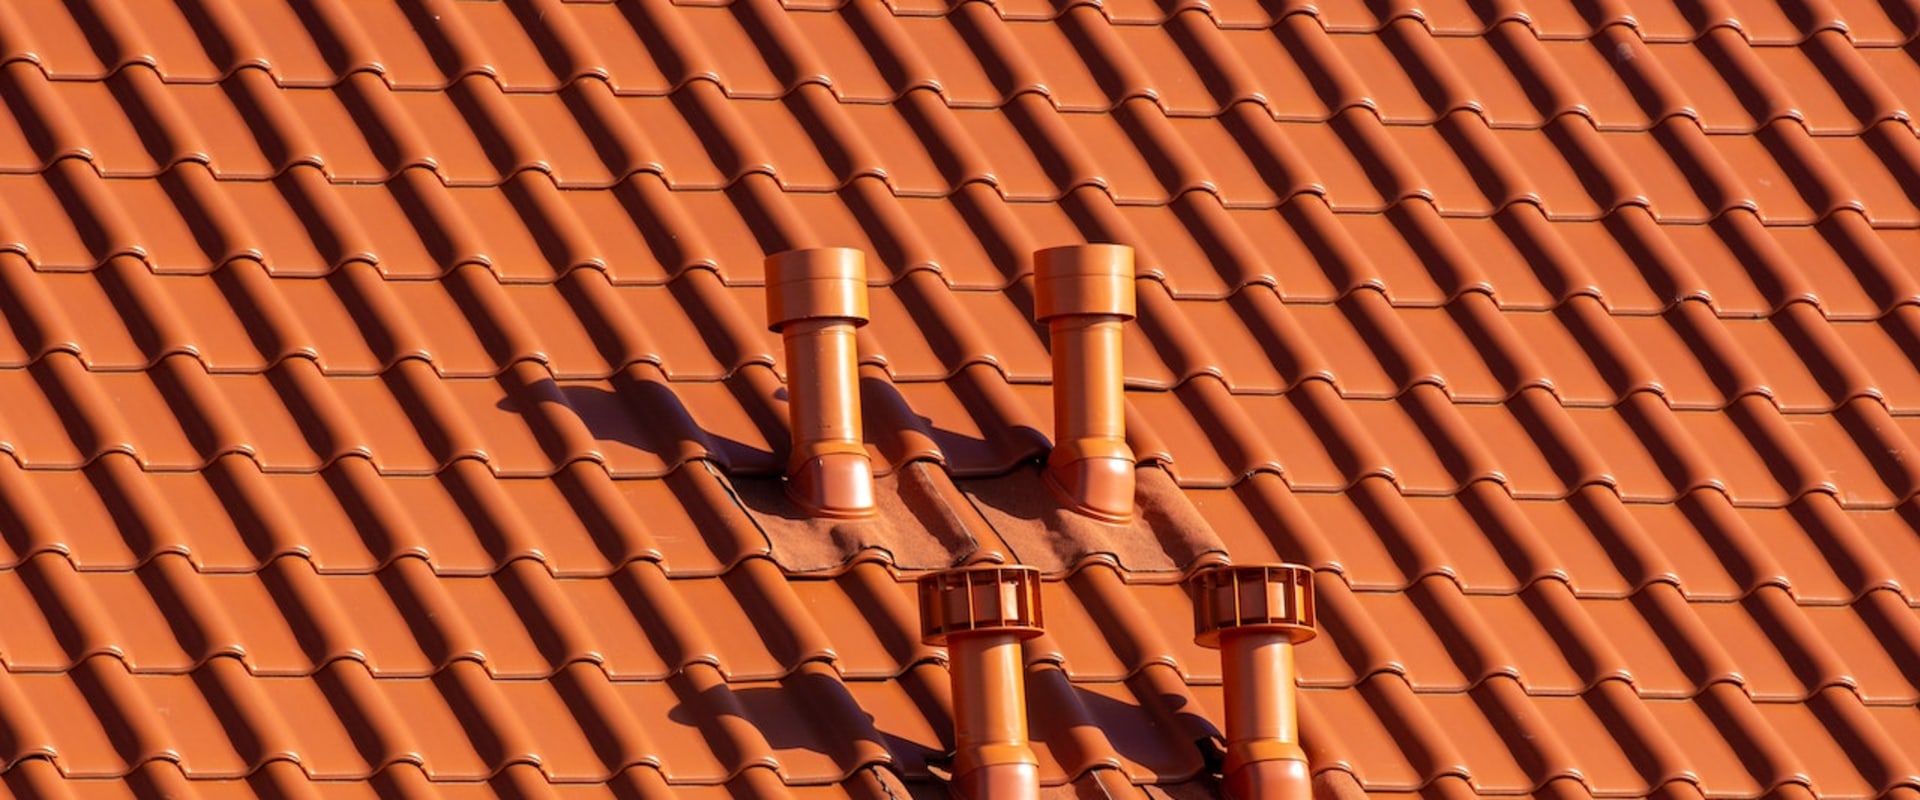 Roof Repairs In Leicester: How Civil Engineering Principles Ensure Long-Lasting Solutions